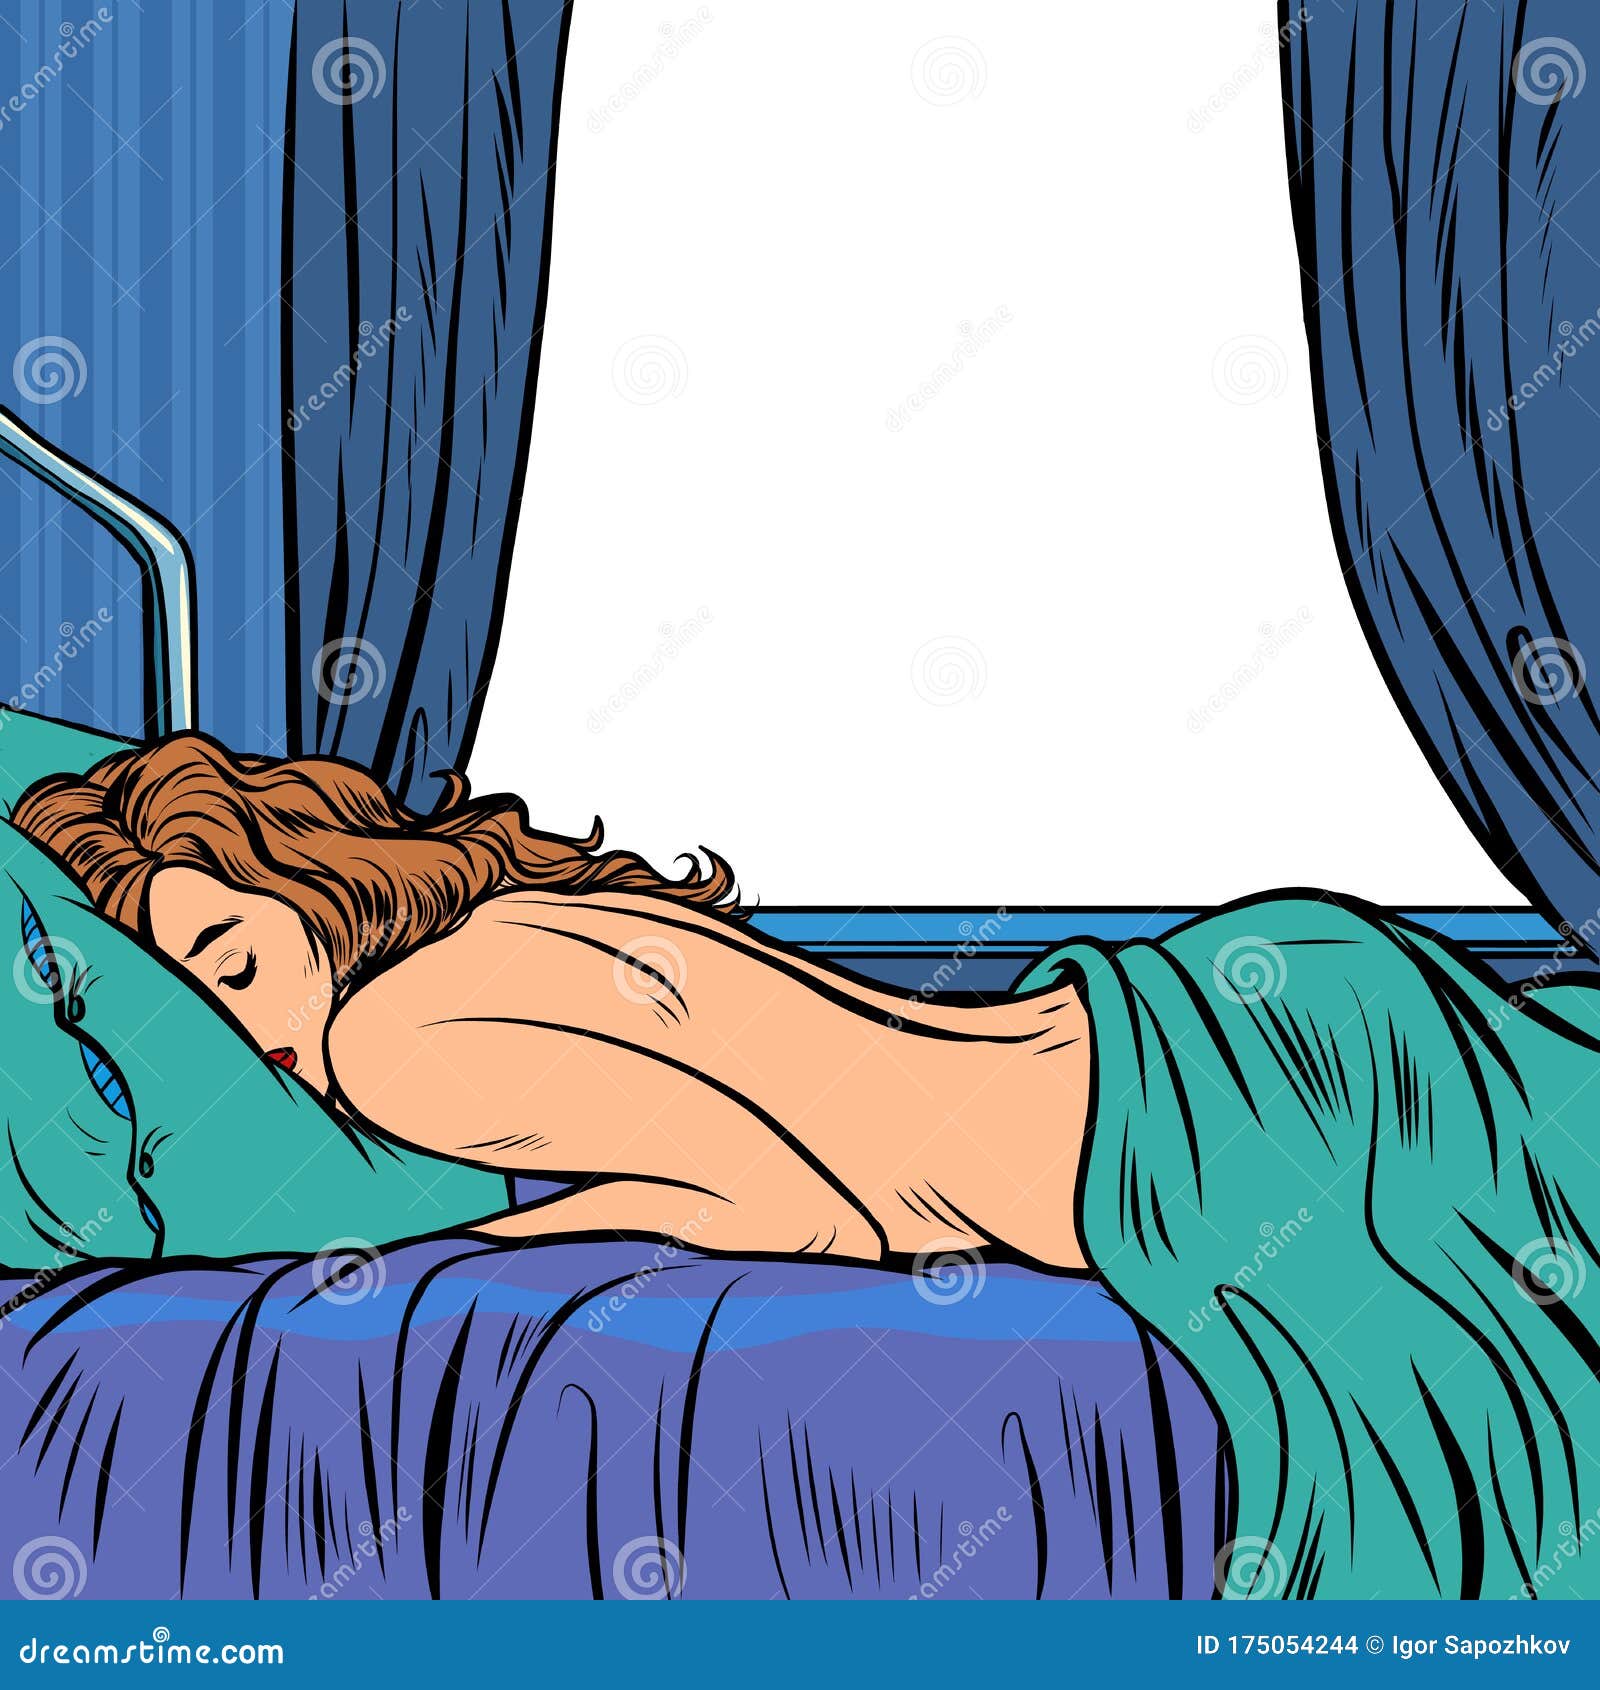 nude girl sleeping in bed